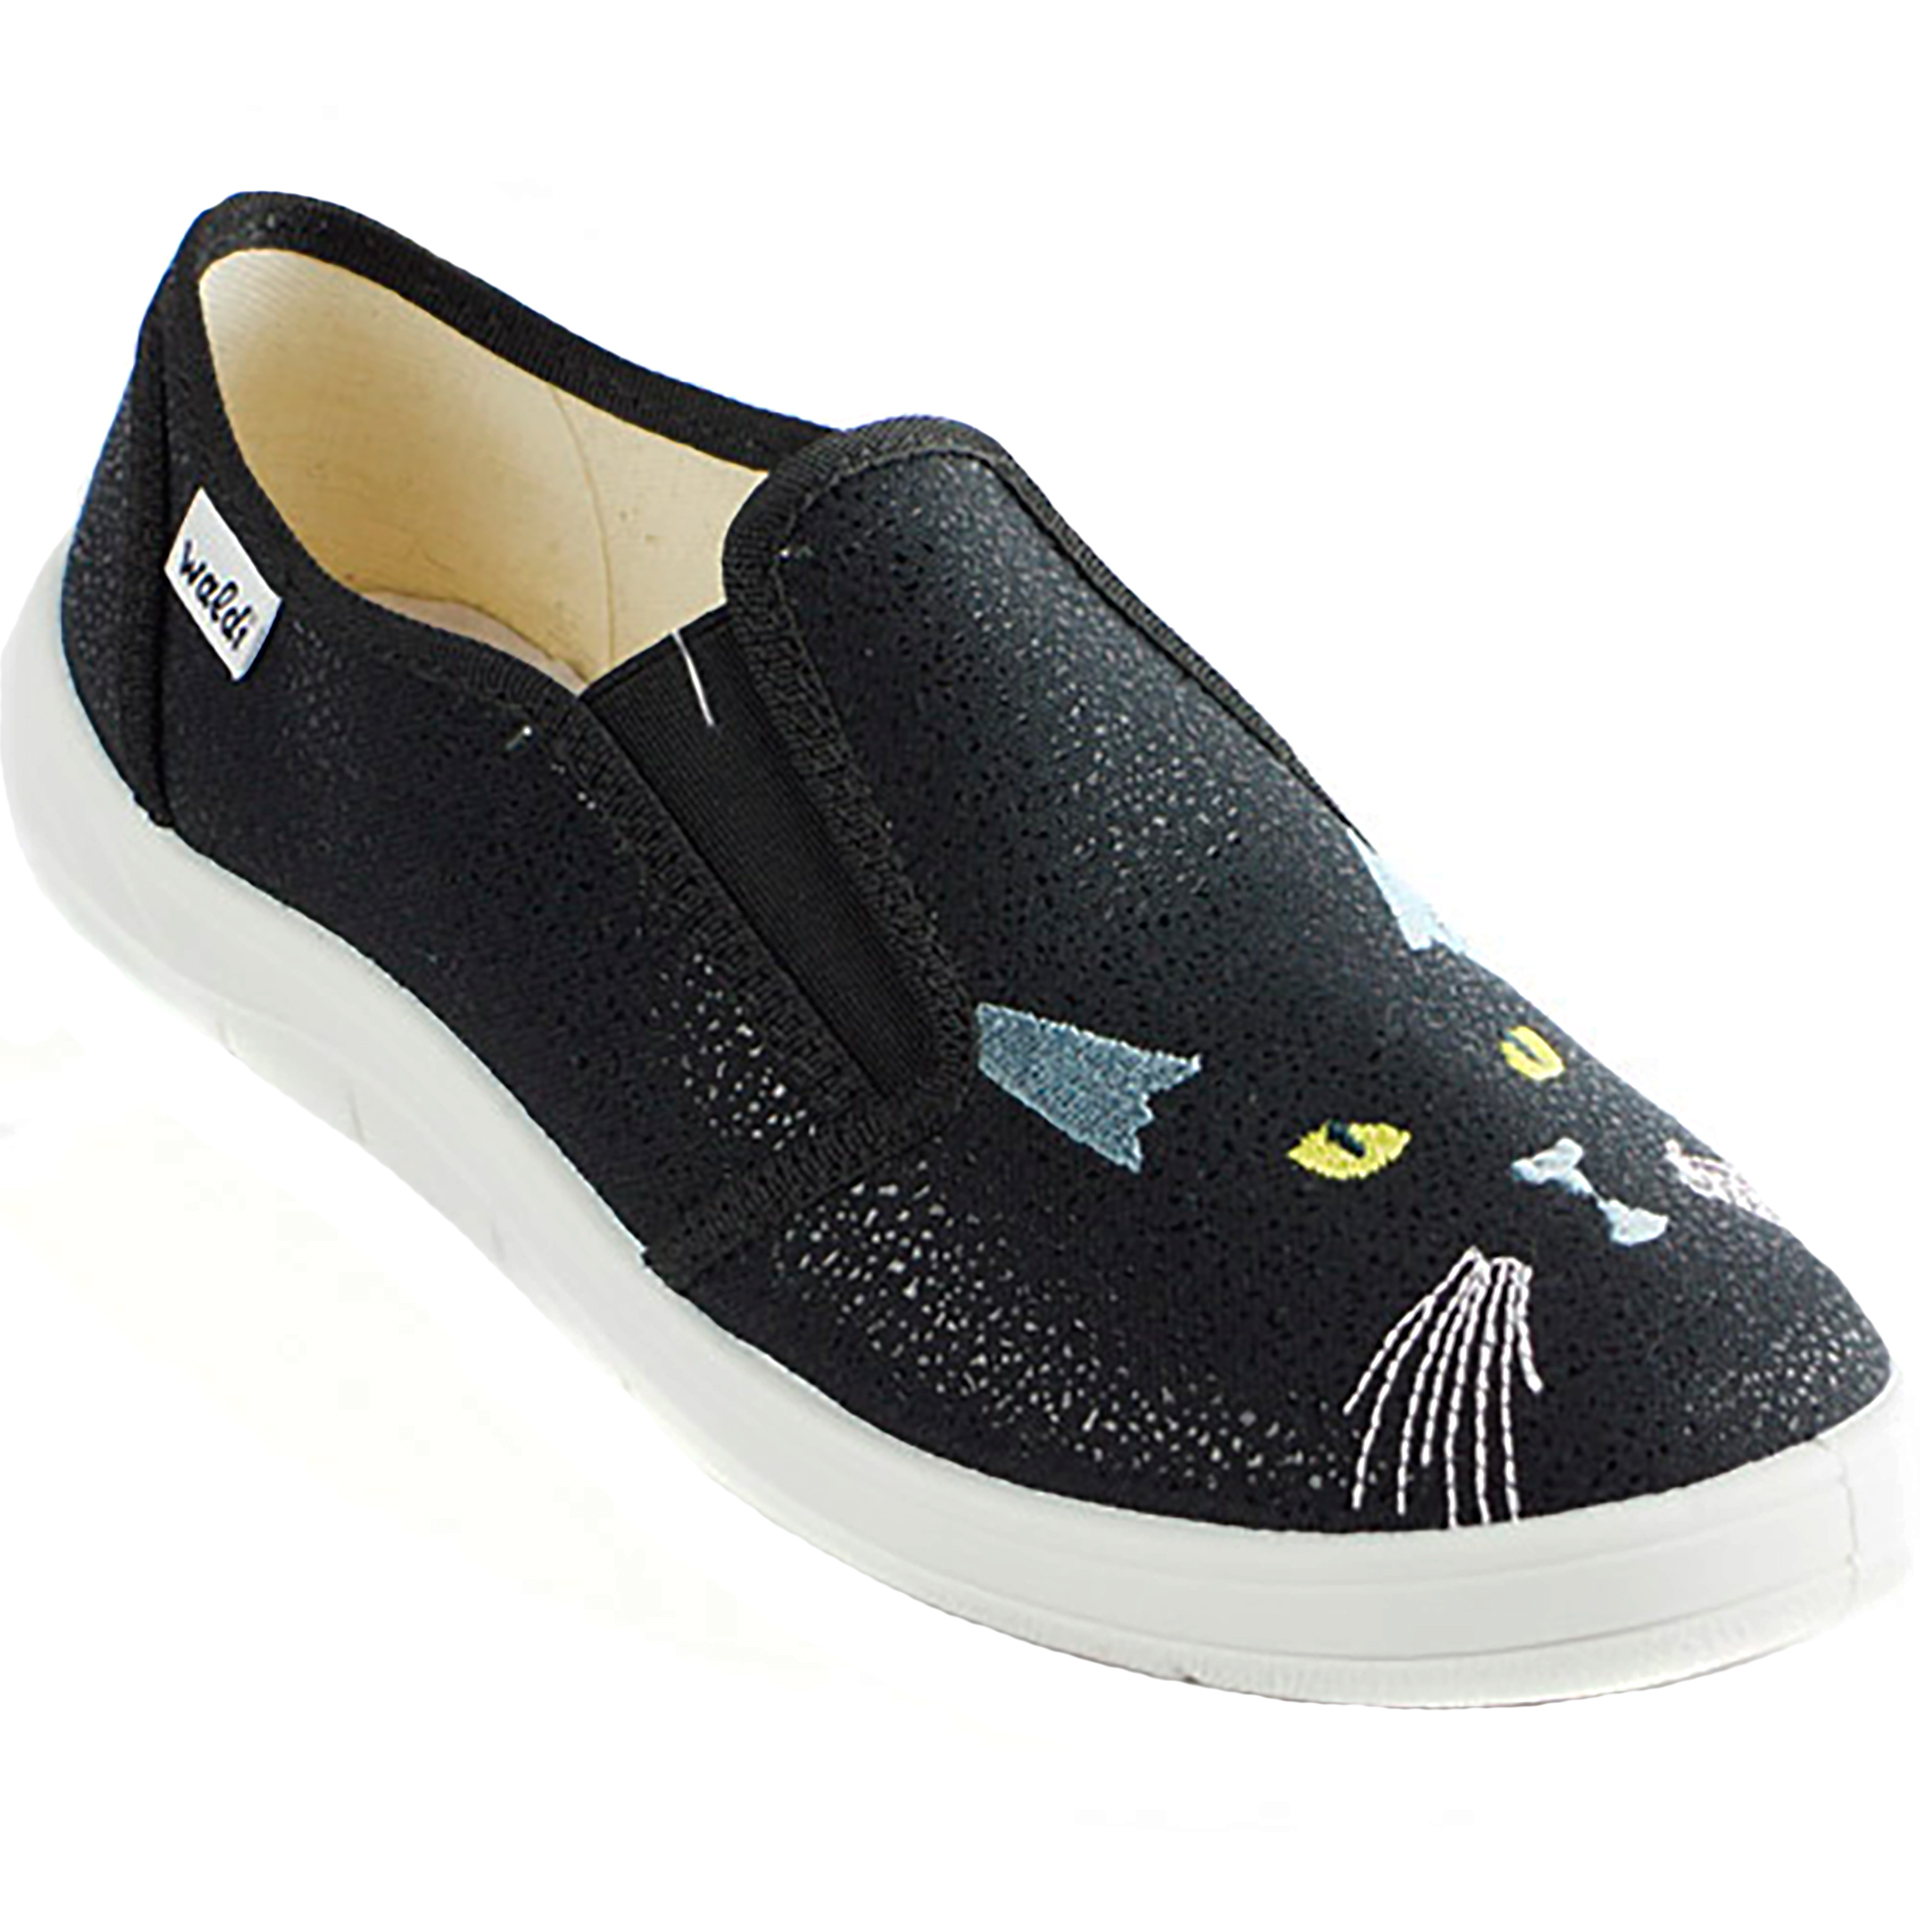 Waldi Капці Black Cat (2253) для дівчинки, Чорний колір, 30-36 розміри – Sole Kids